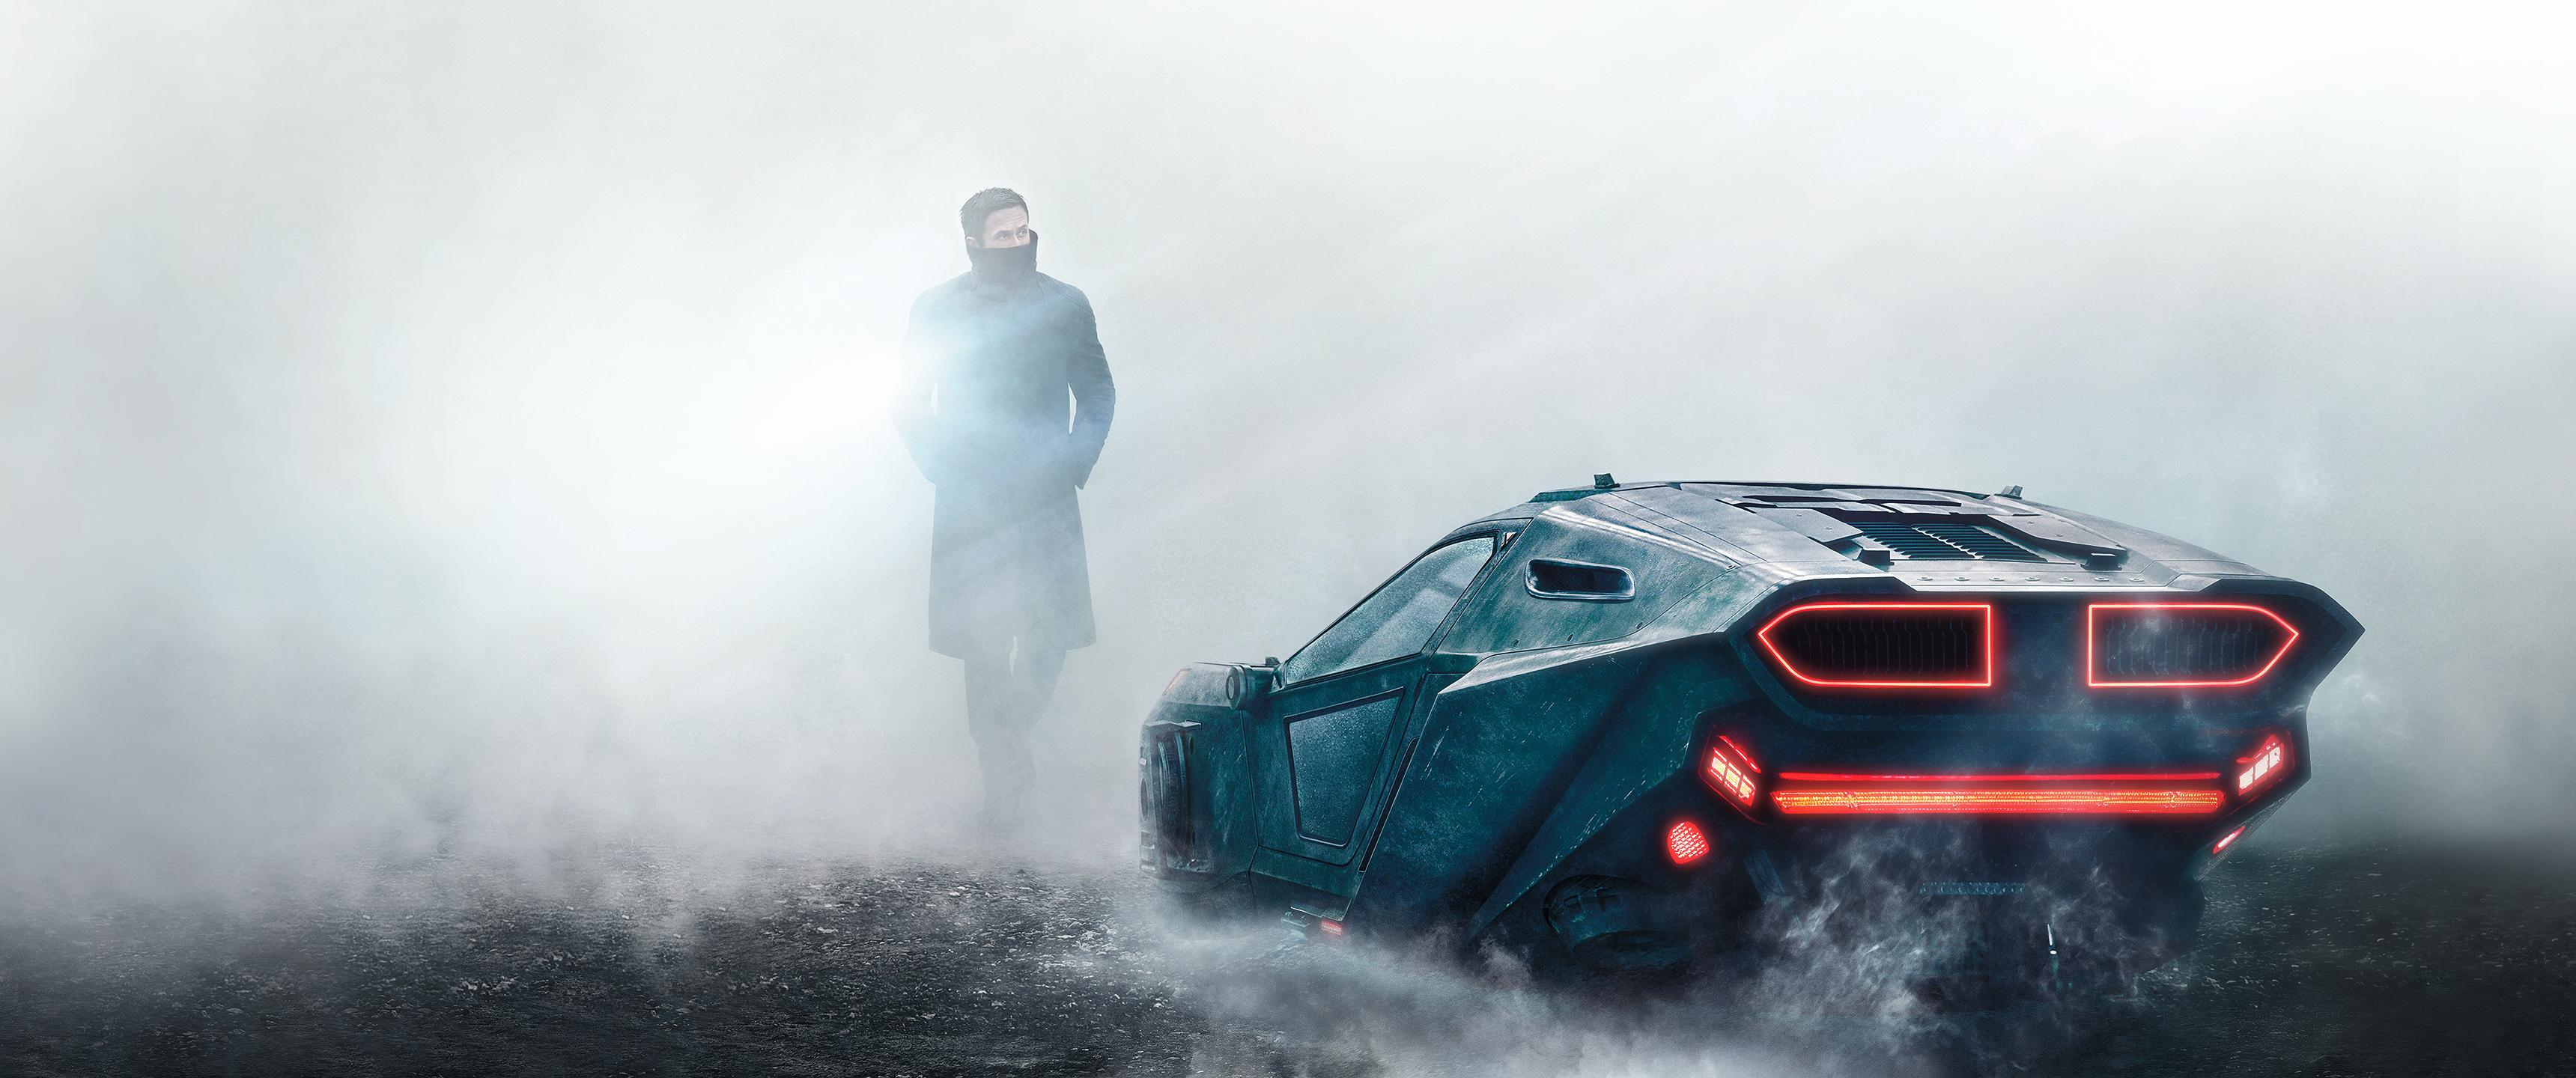 General 3440x1440 Ryan Gosling movies Blade Runner 2049 Blade Runner Movie Vehicles actor Denis Villeneuve Peugeot French Cars